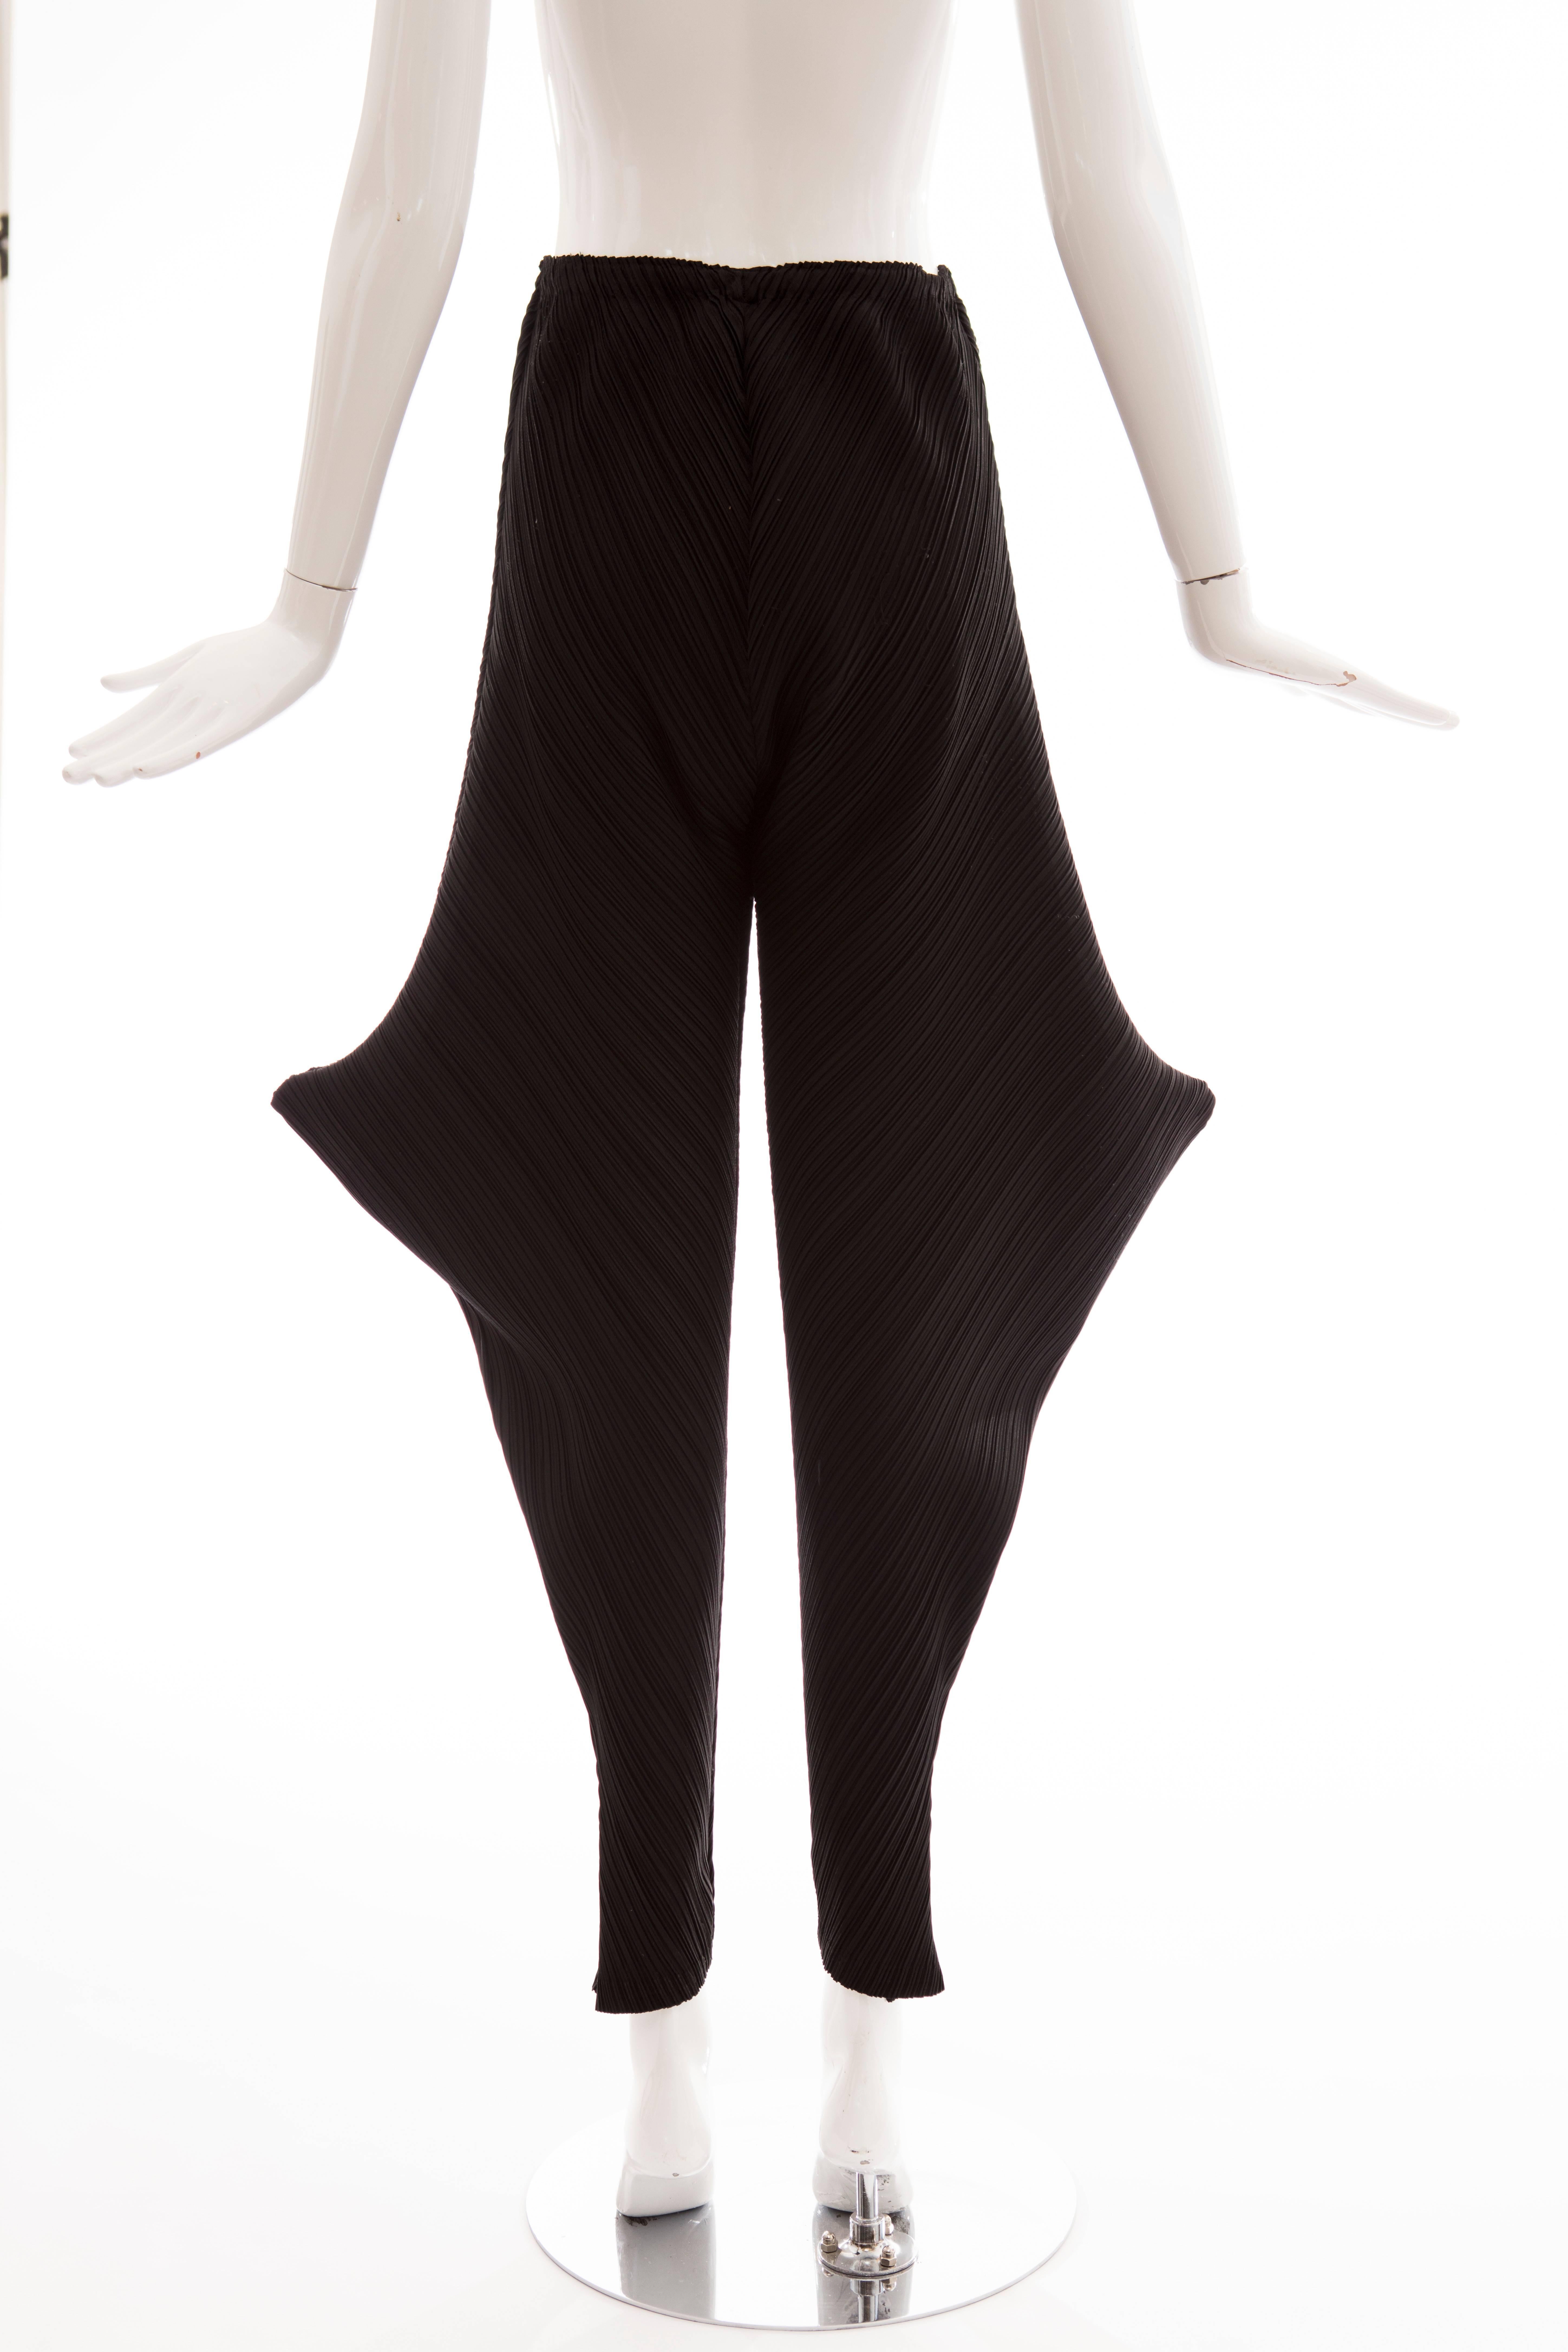 Issey Miyake, Circa: 1990's plissé pants with structured detail at sides and elasticized band at waist.

Japan 2
US. Medium

Waist: 28